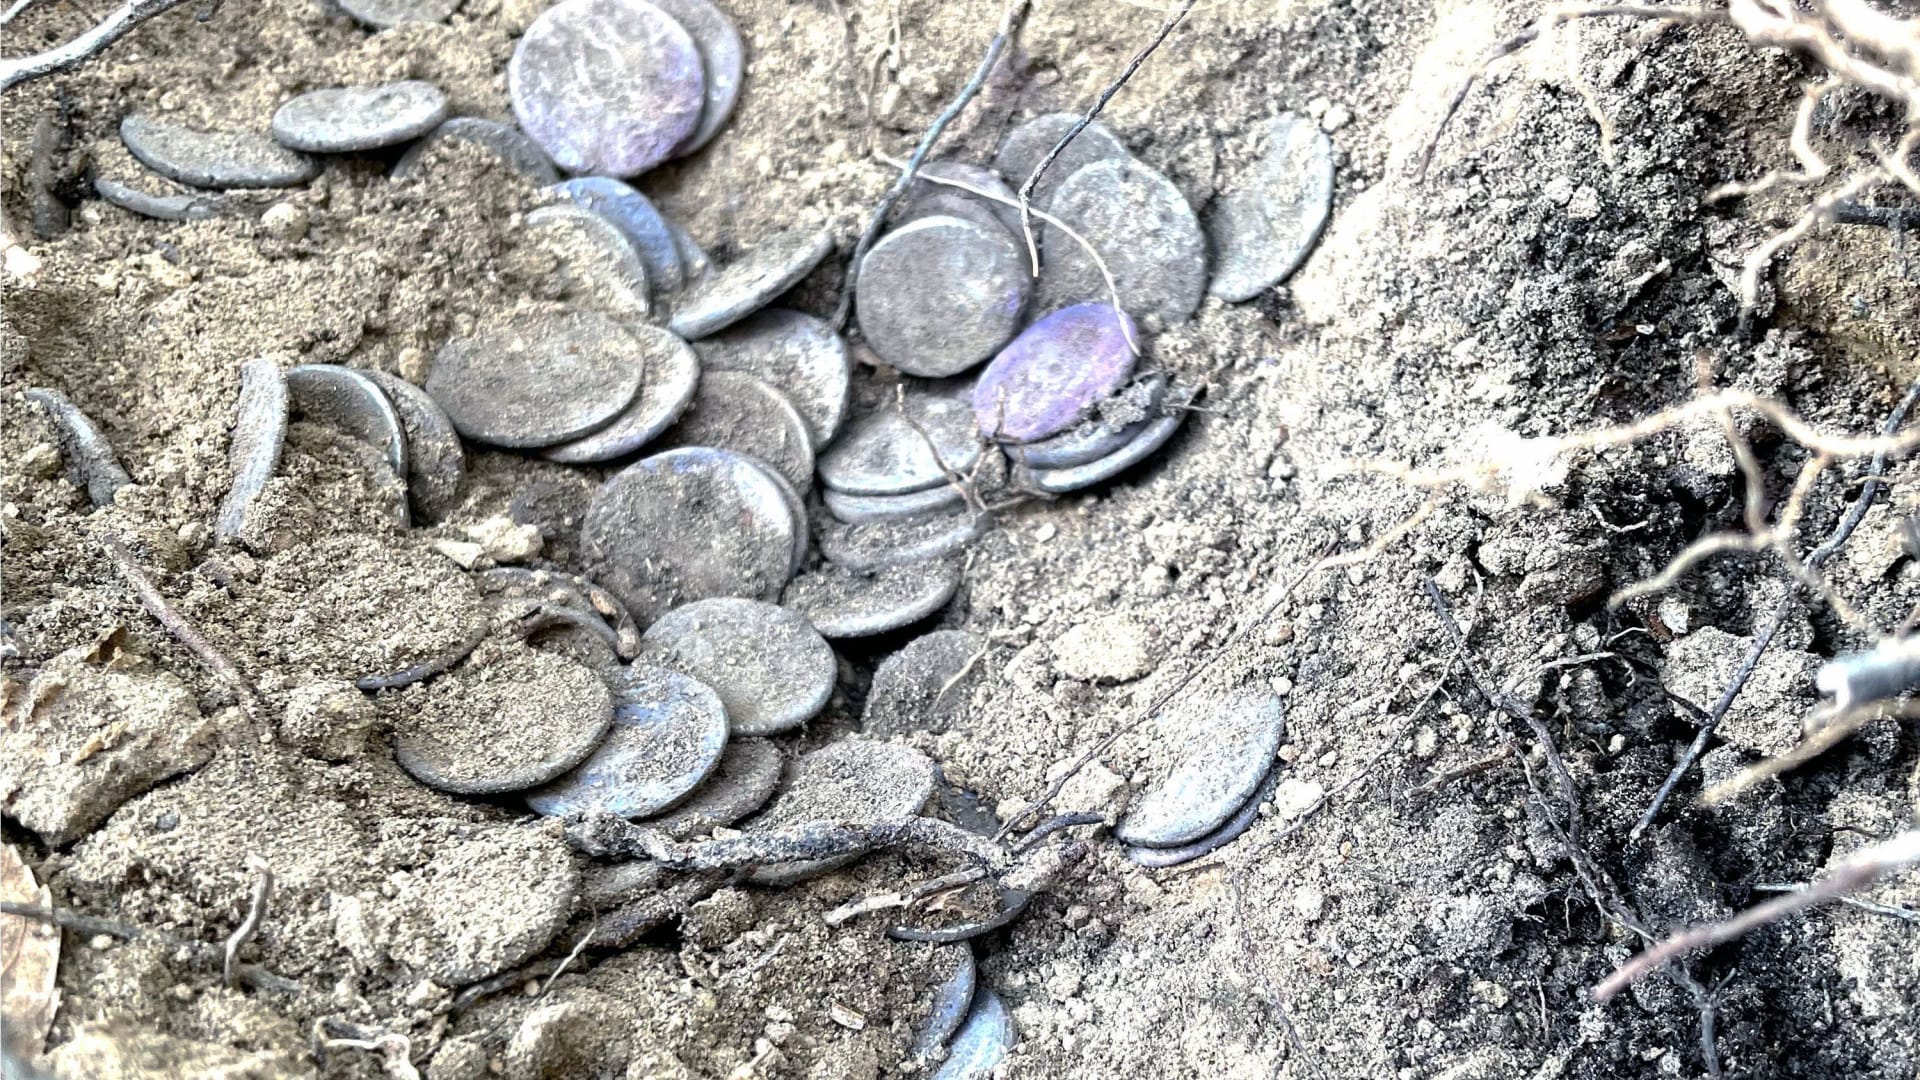 230428172948-02-roman-coins-buried-treasure-italy-scn-042023.jpg